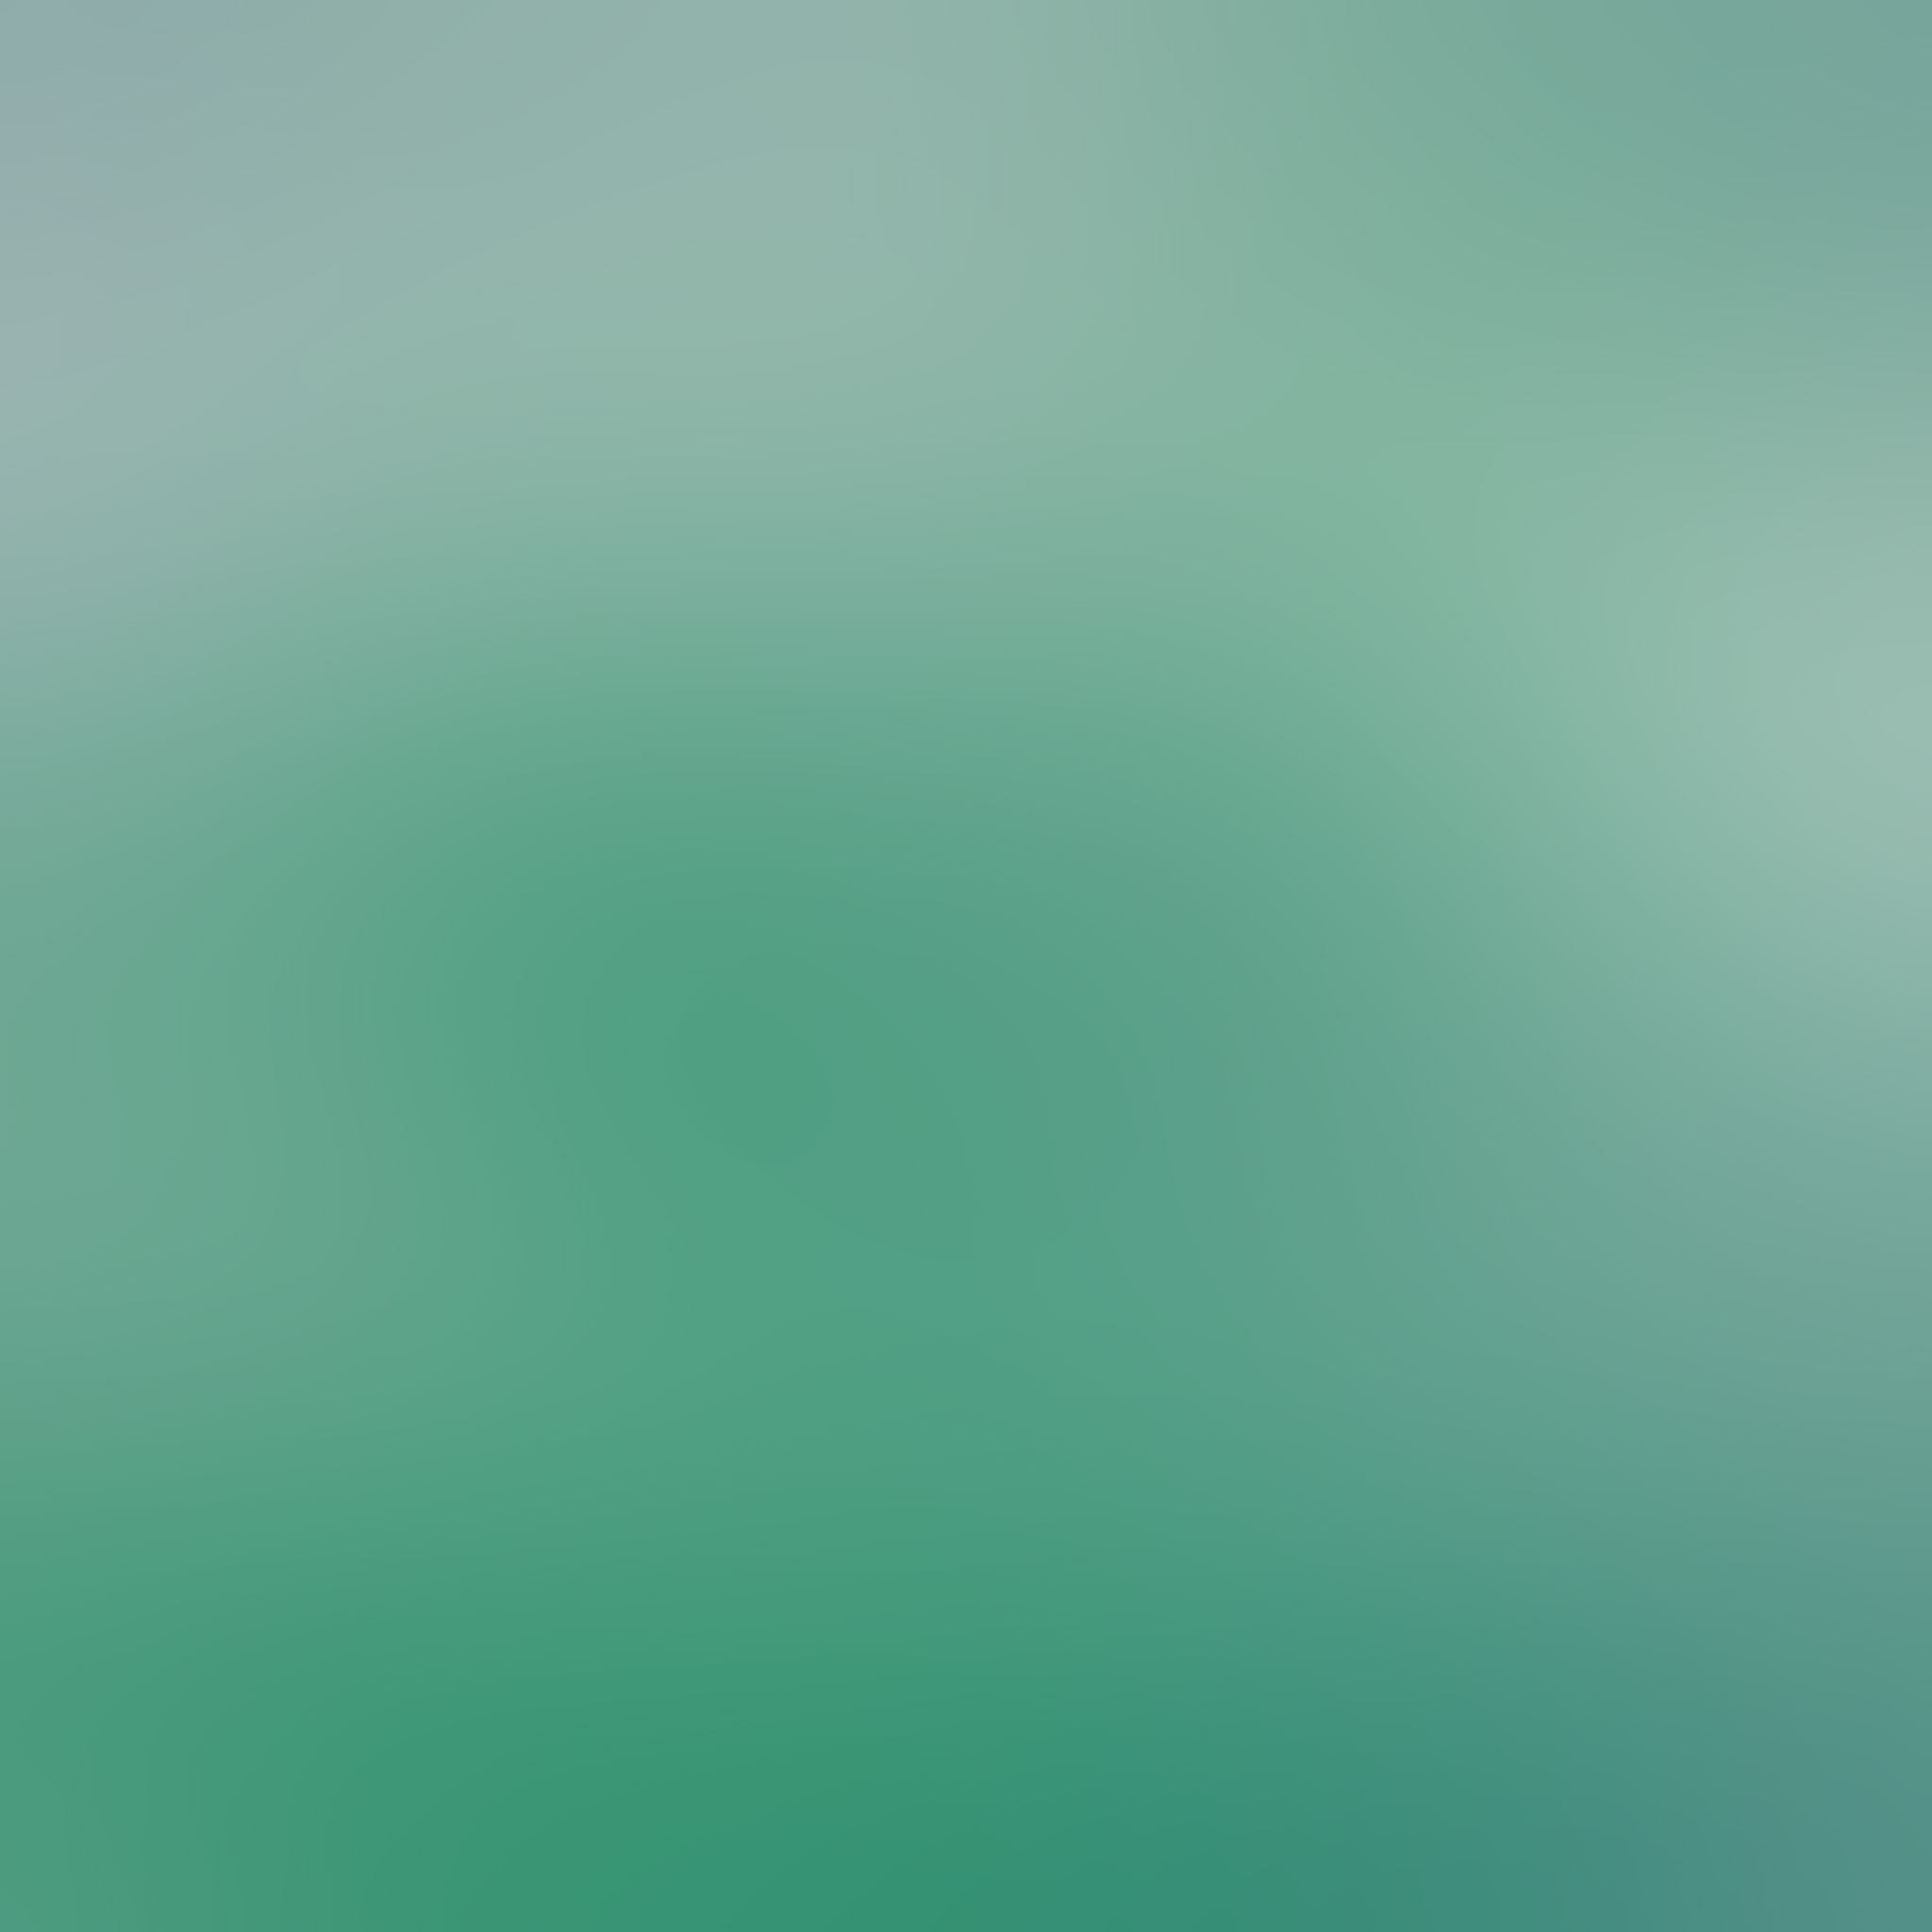 Green Water Gradation Blur iPad Air wallpaper 